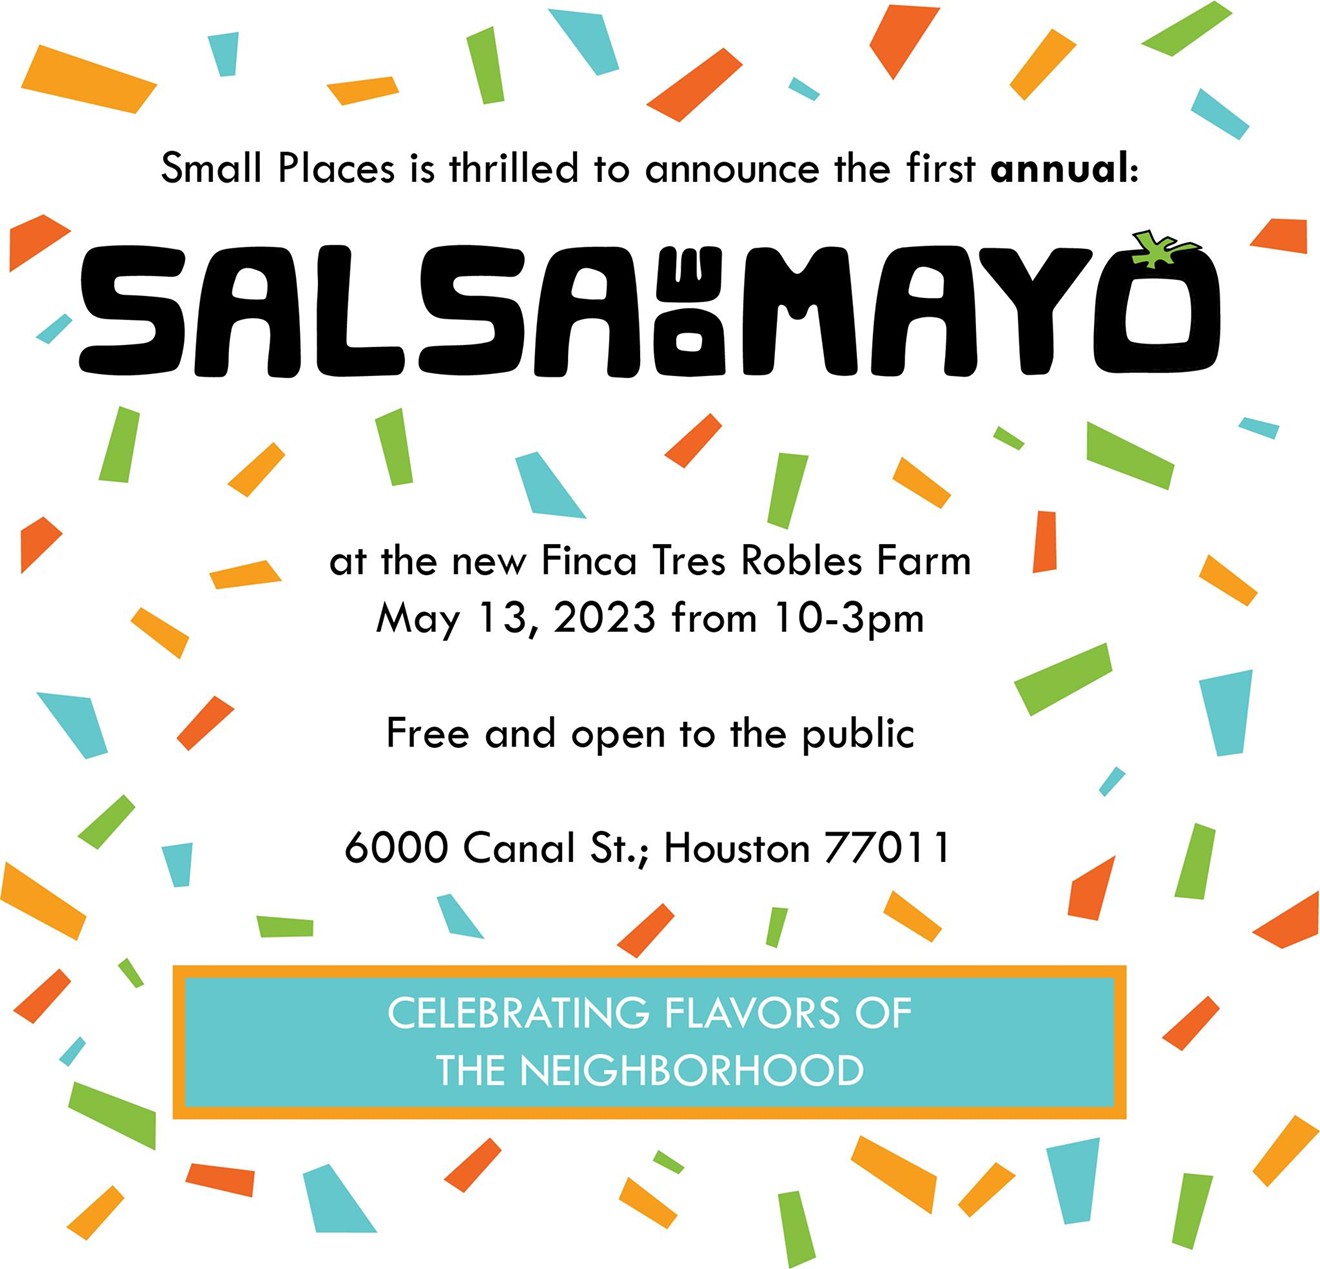 salsa-de-mayo-promo-image.jpg